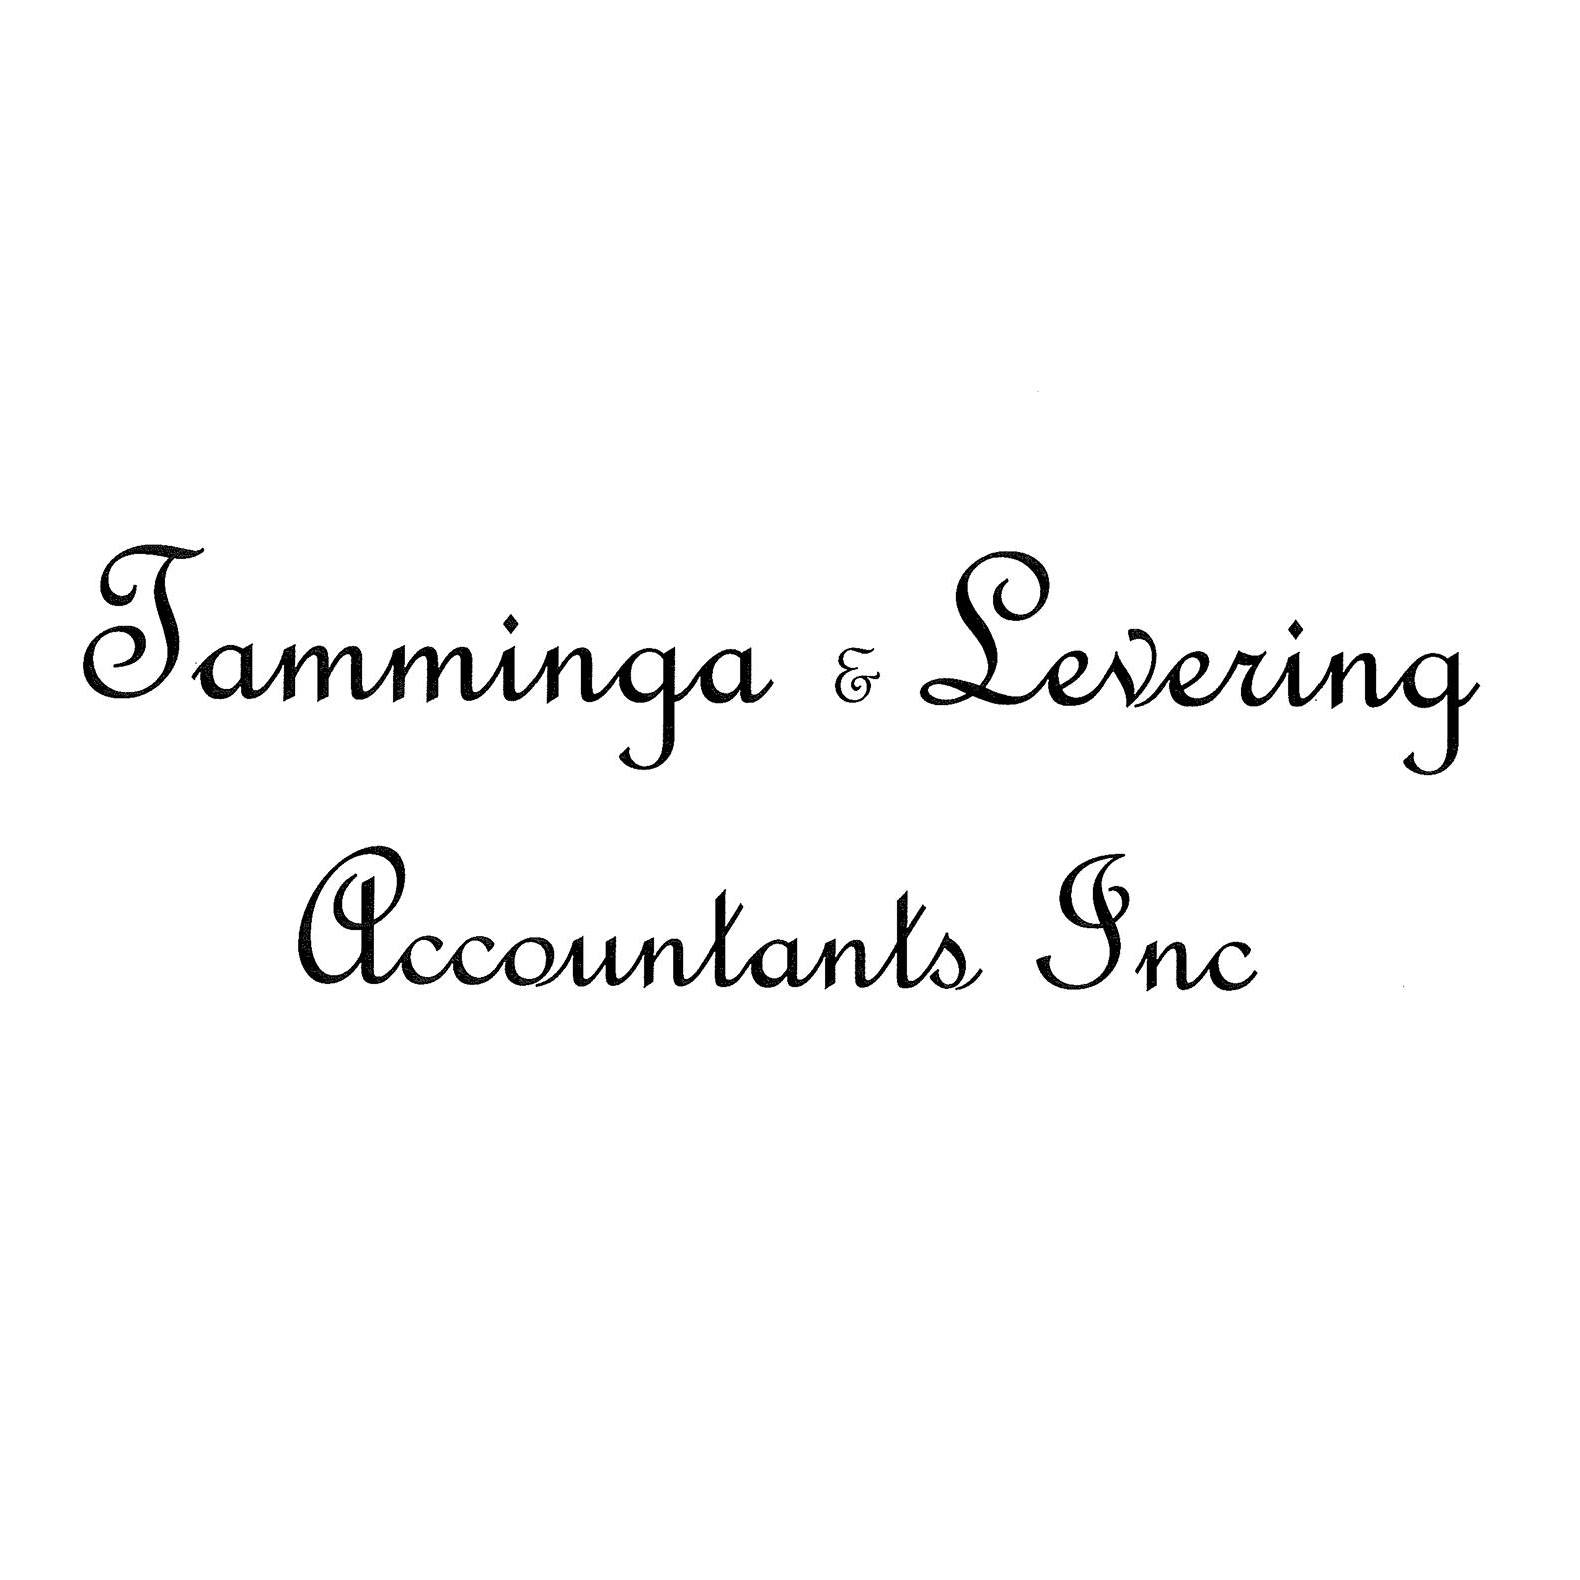 Tamminga & Levering Accountant Inc Tamminga & Levering Accountant Inc, 11304 Edgewater Drive # C, Allendale Michigan 49401